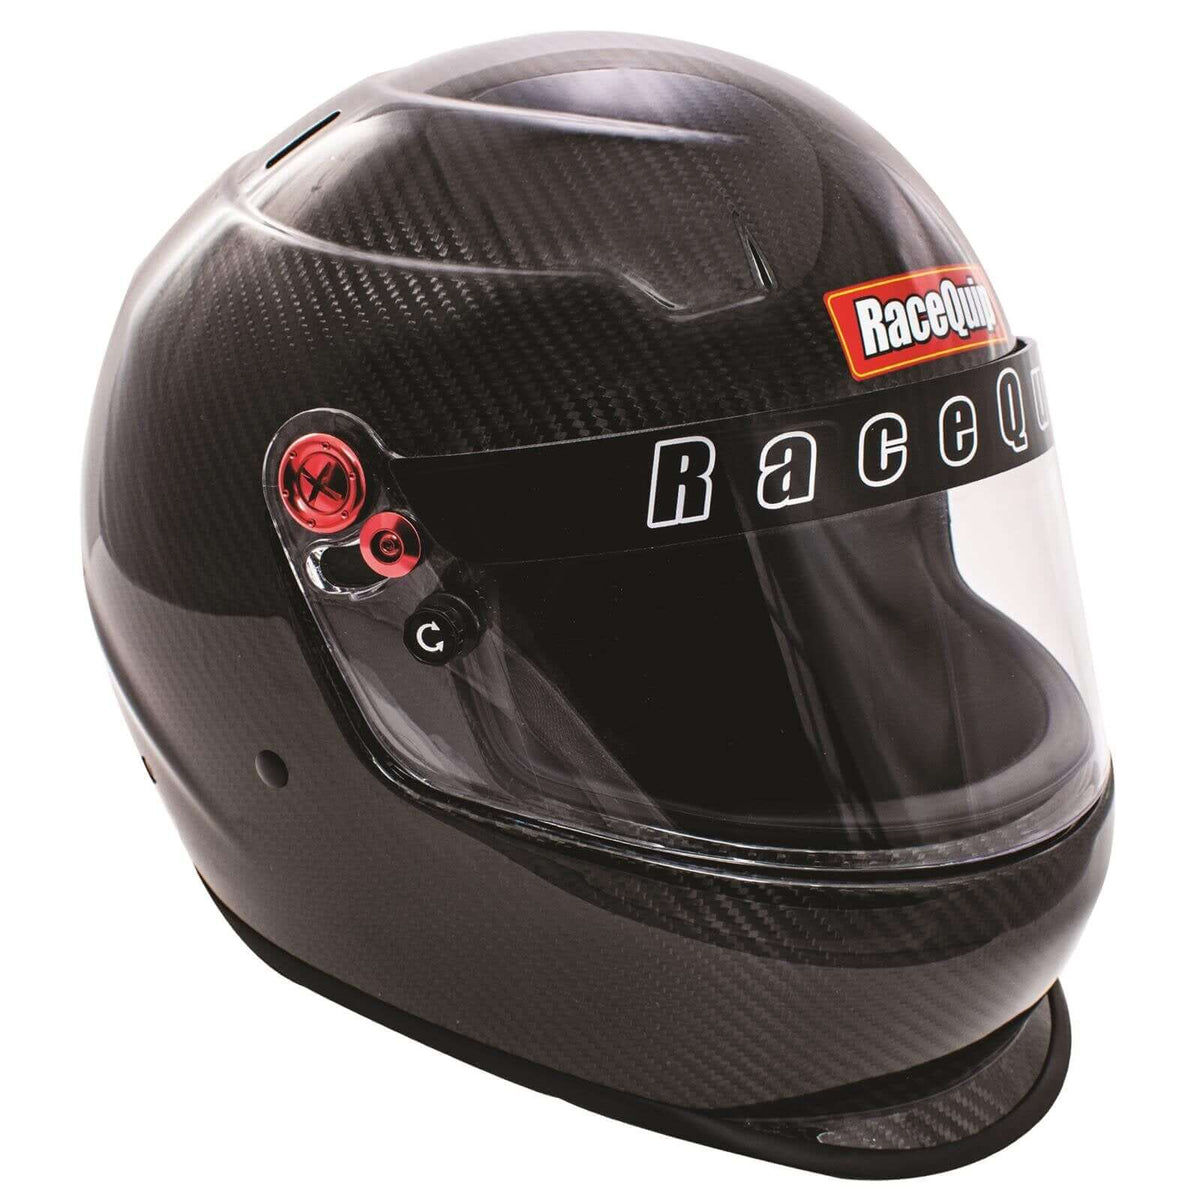 PRO20 Carbon Helmet - $604.95